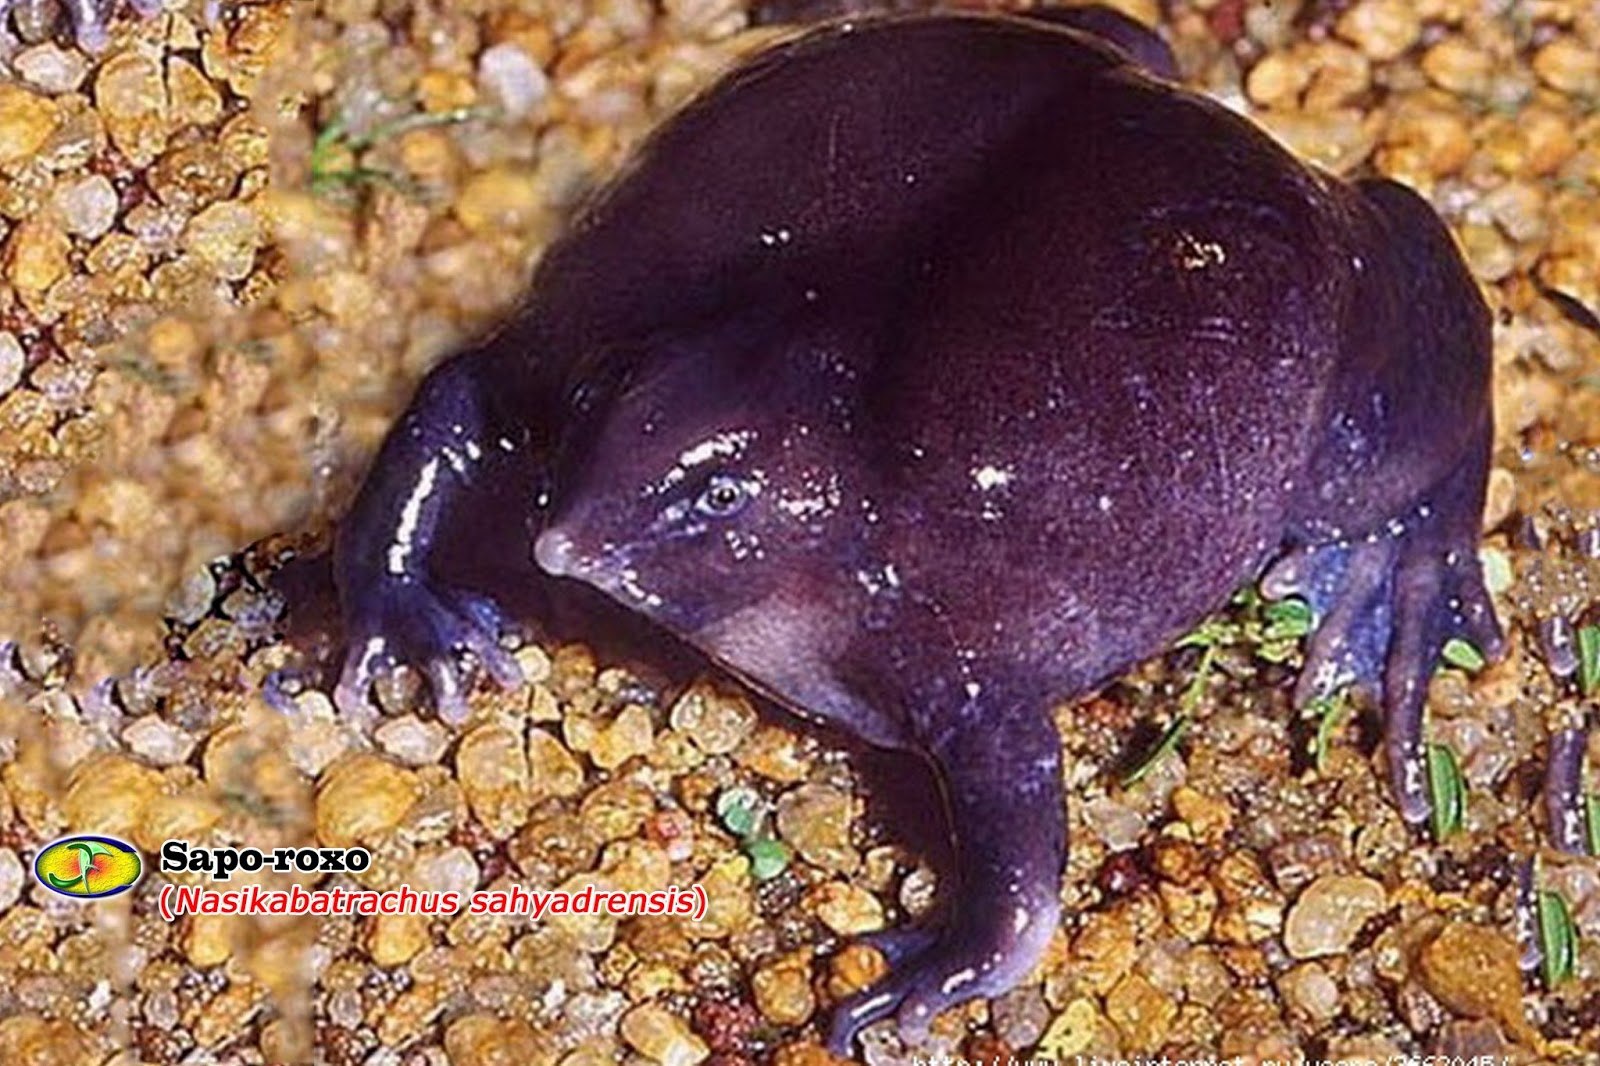 Фиолетовая лягушка. Лягушка Nasikabatrachus sahyadrensis. Пурпурная свиноносая лягушка. Лягушка Арлекин фиолетовая. Индийская пурпурная лягушка.